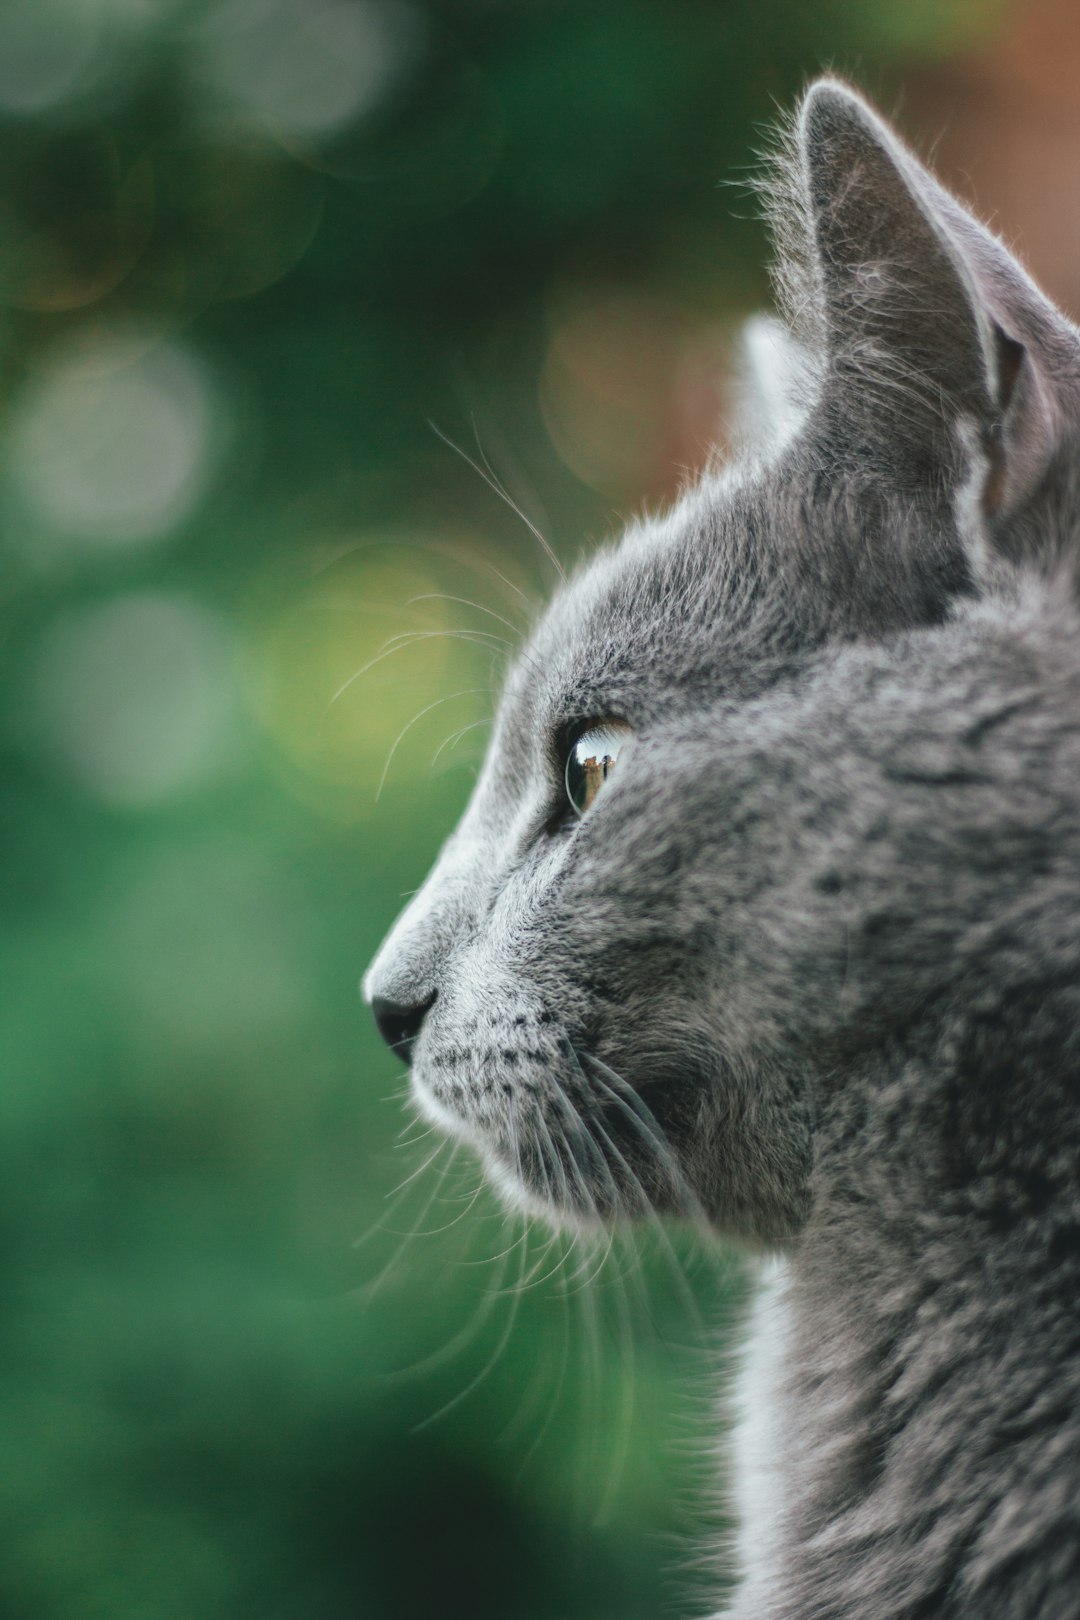 russian blue cat in tilt shift lens